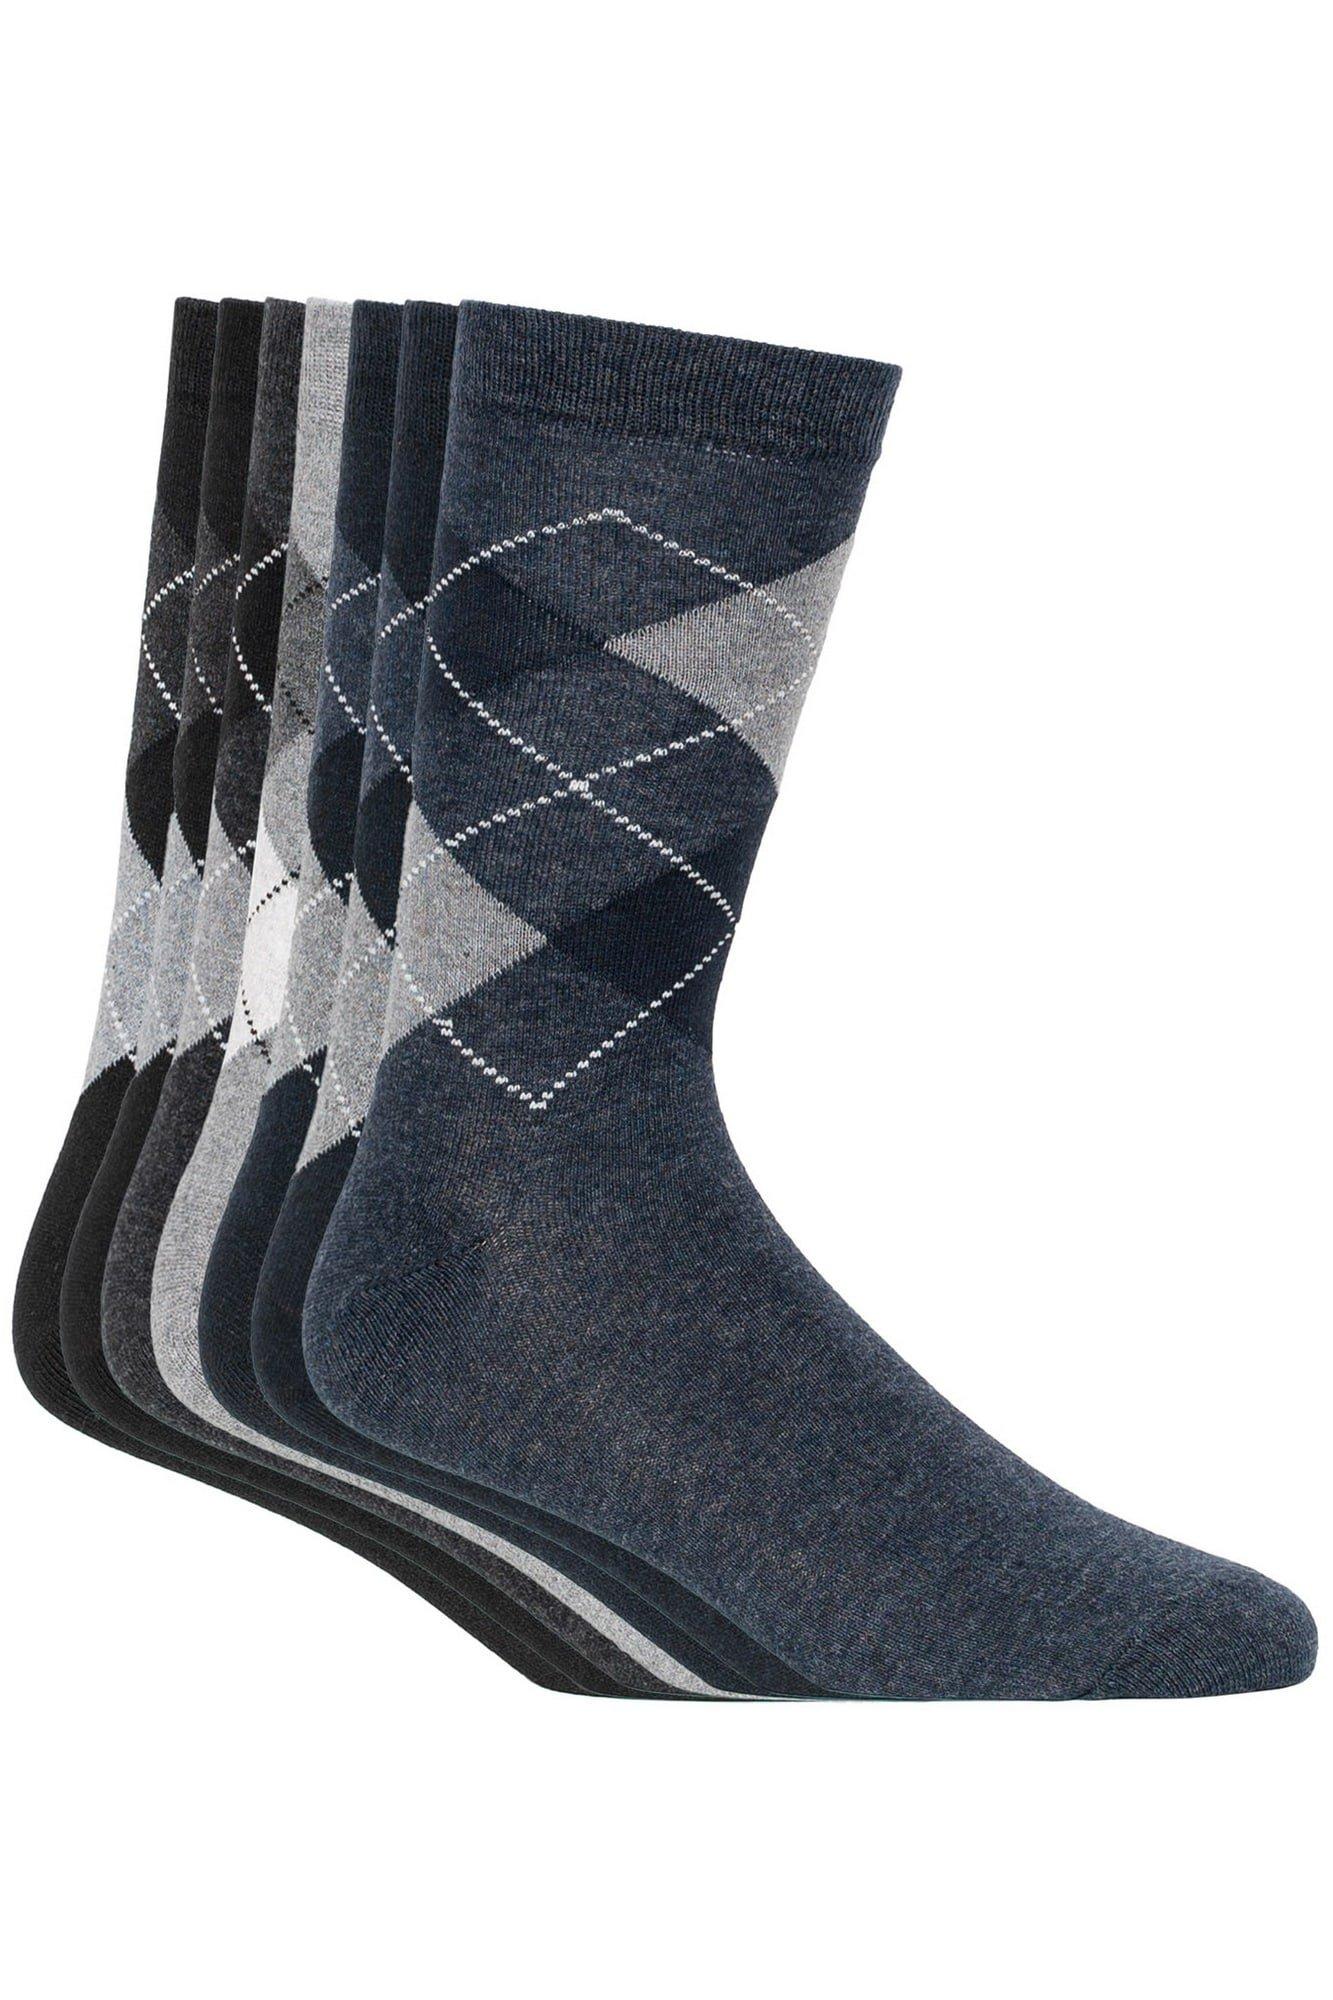 Detrick Sustainable Socks (Pack of 7)